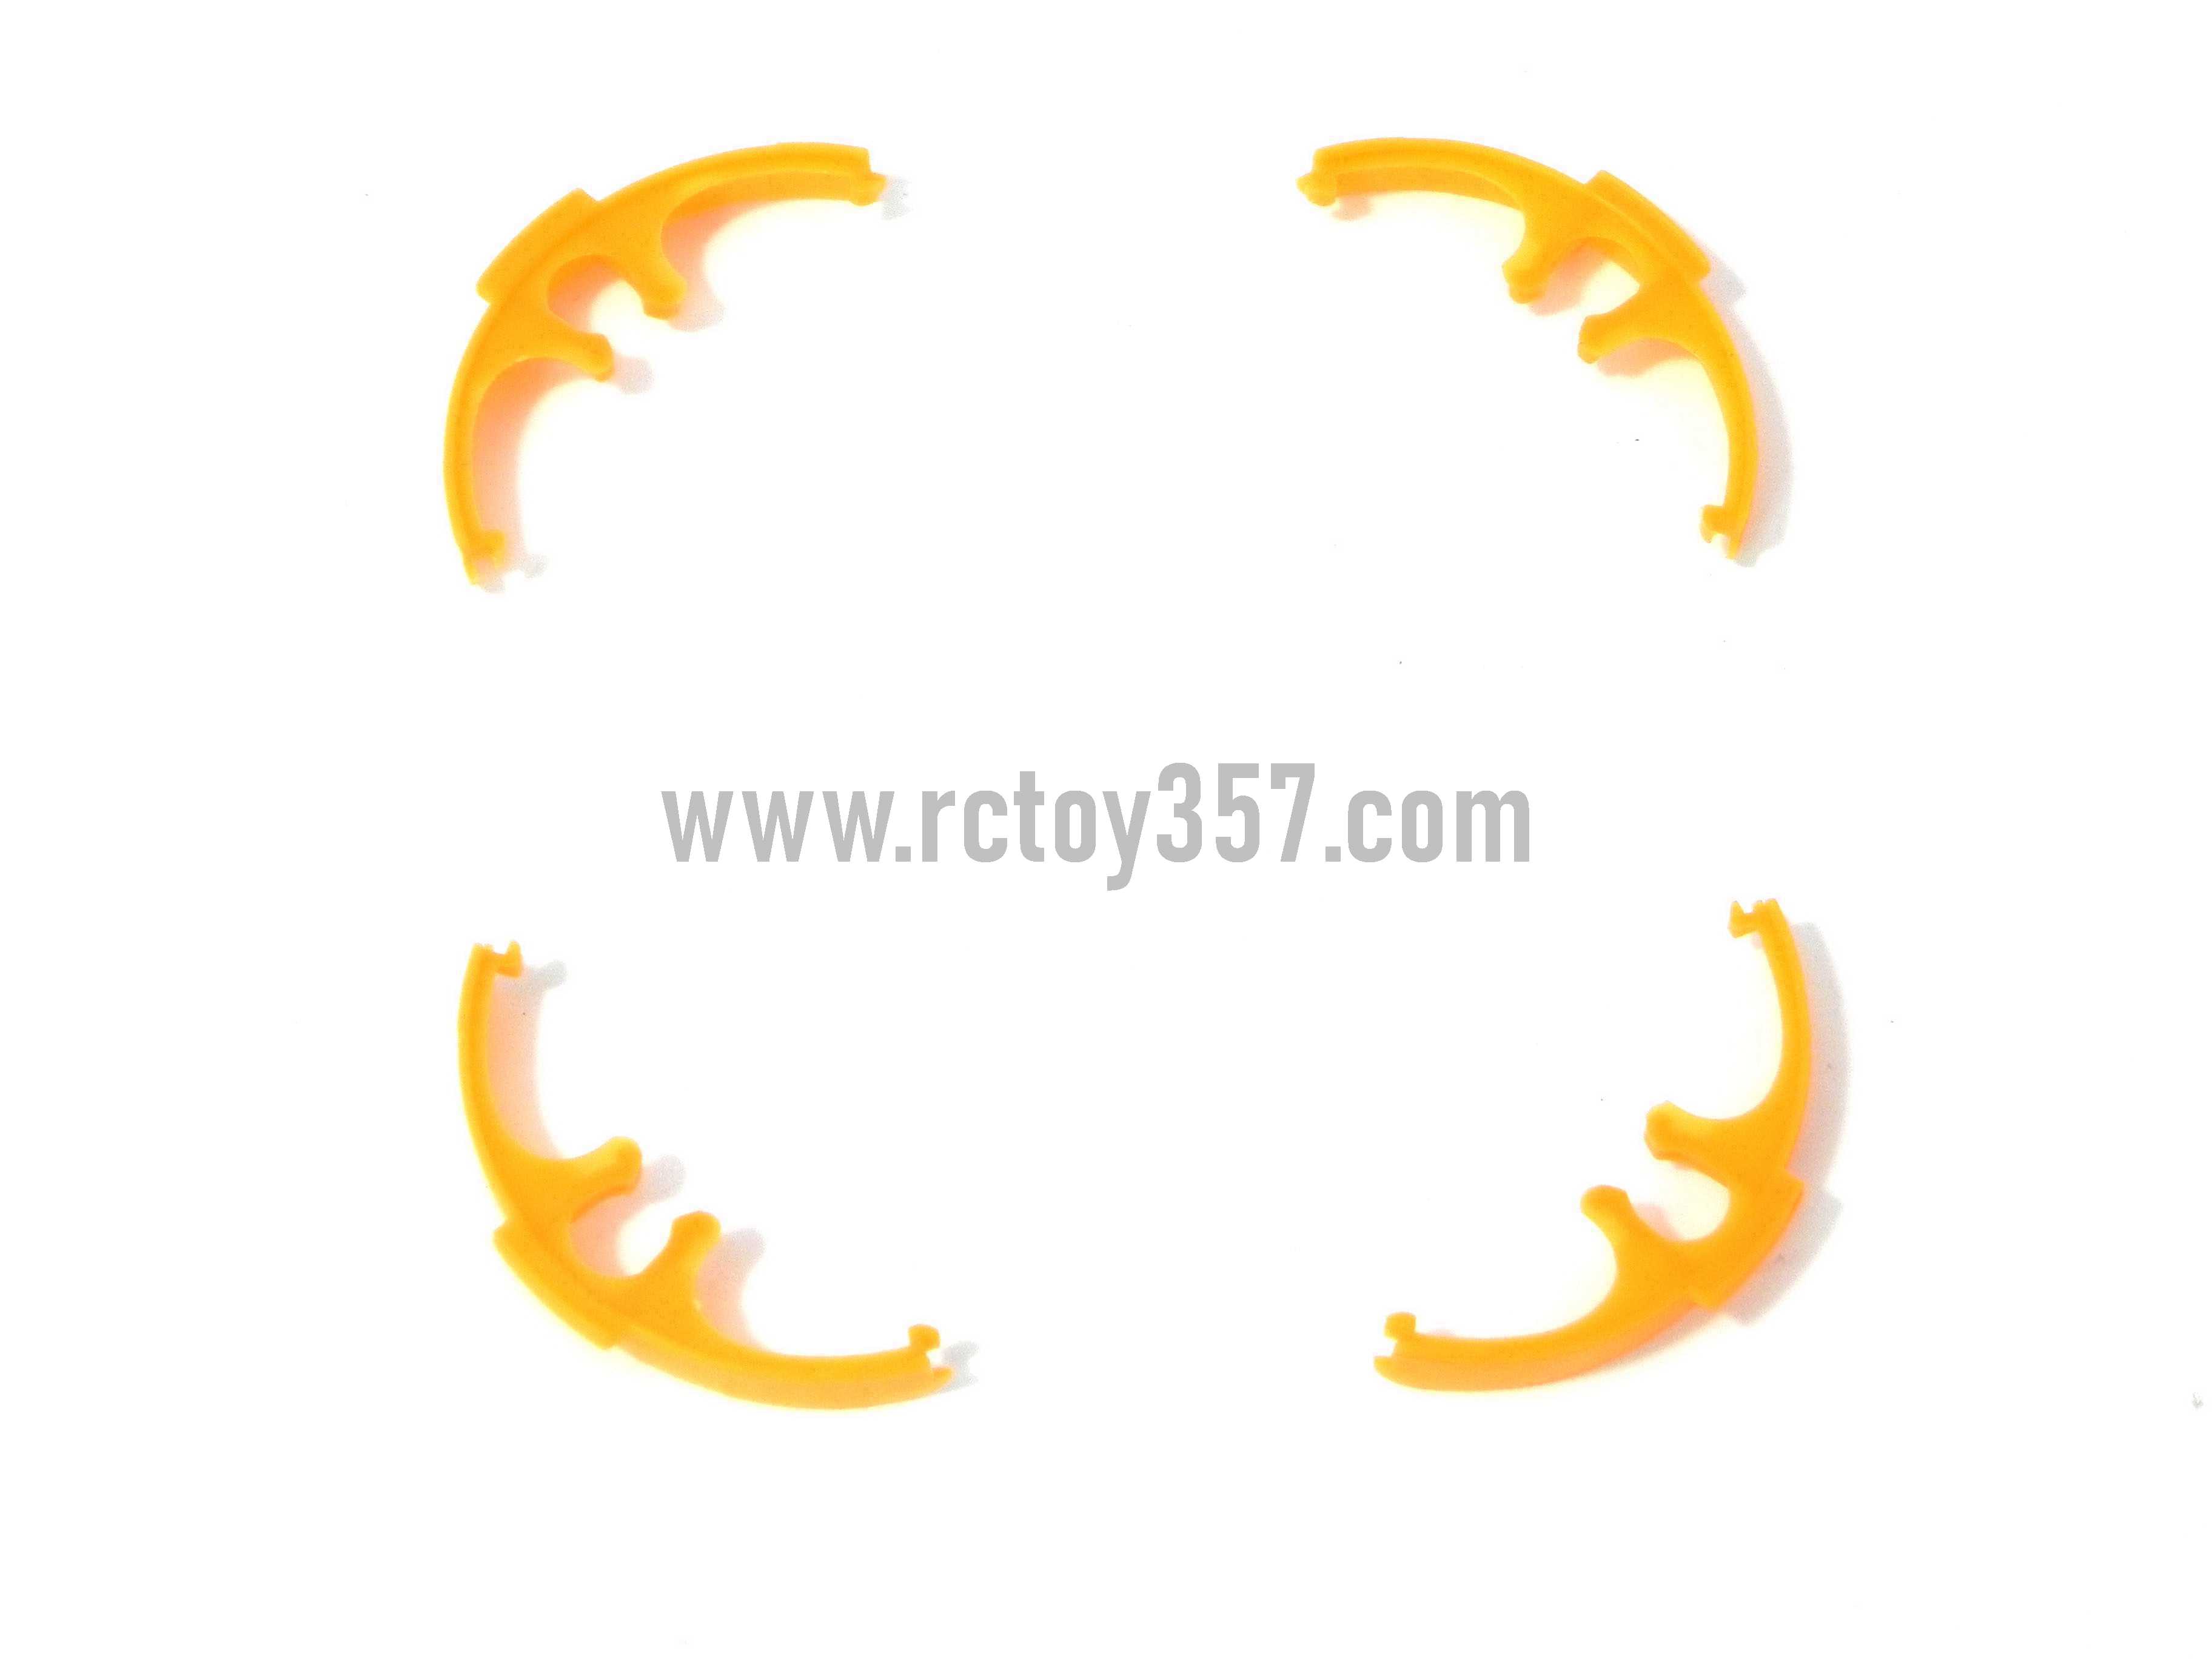 RCToy357.com - SYMA X8W Quadcopter toy Parts decoration(yellow)